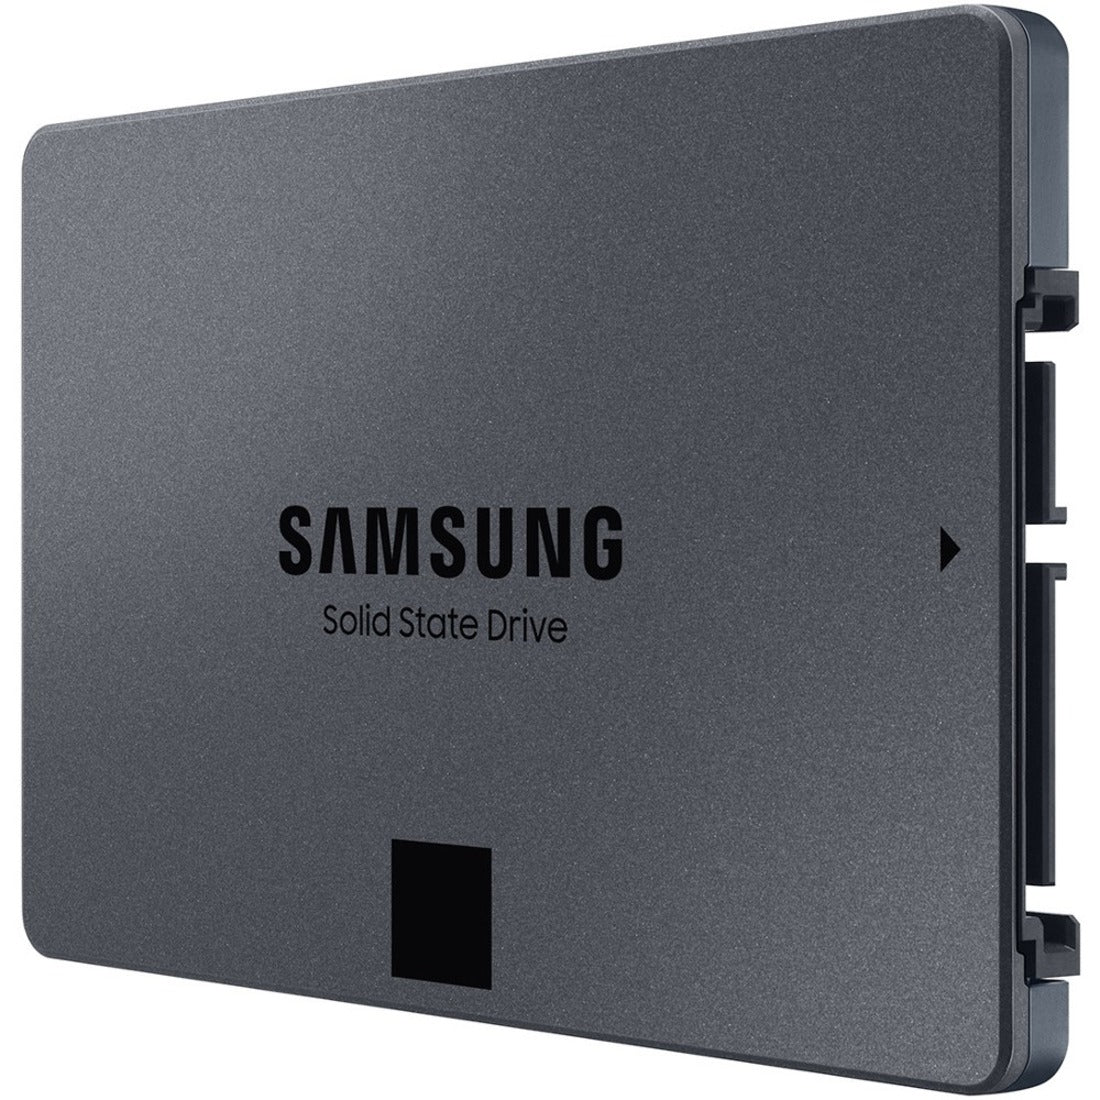 Samsung MZ-77Q2T0B/AM 870 QVO SATA III 2.5" SSD 2TB, High-Speed Storage for Windows, Mac, and Linux